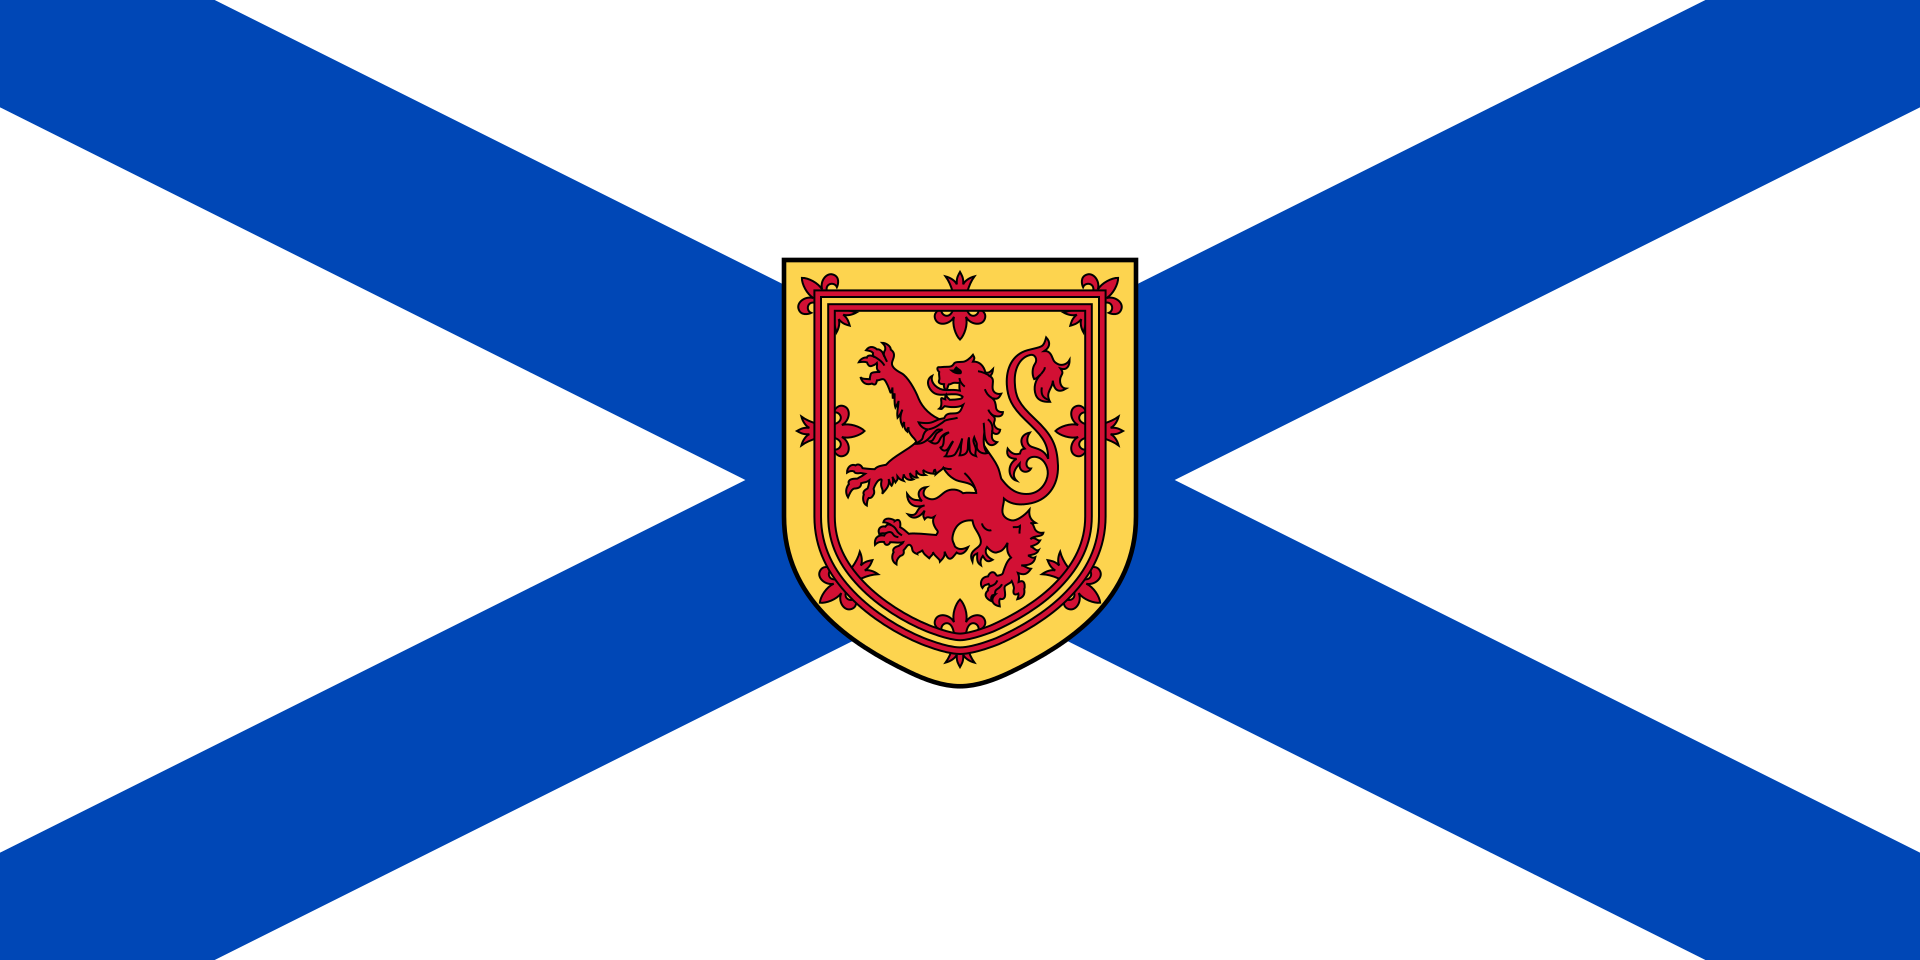 Nova Scotia - LIB: 38% - PC: 36% - NDP: 21% - GRN: 3% ...